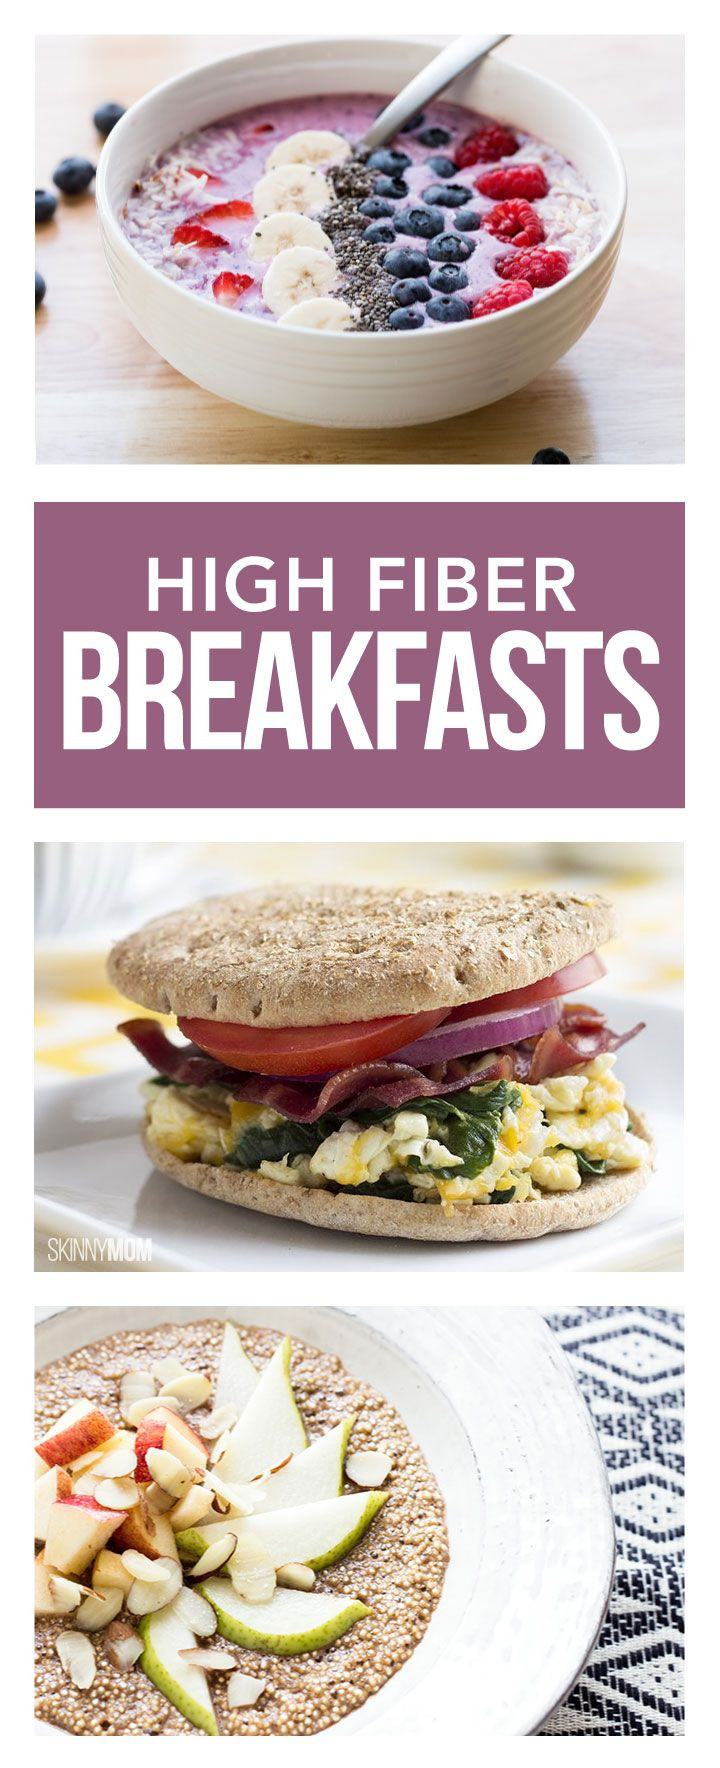 High Fiber Breakfast Recipe
 7 High Fiber Breakfasts To Power You Through To Lunch